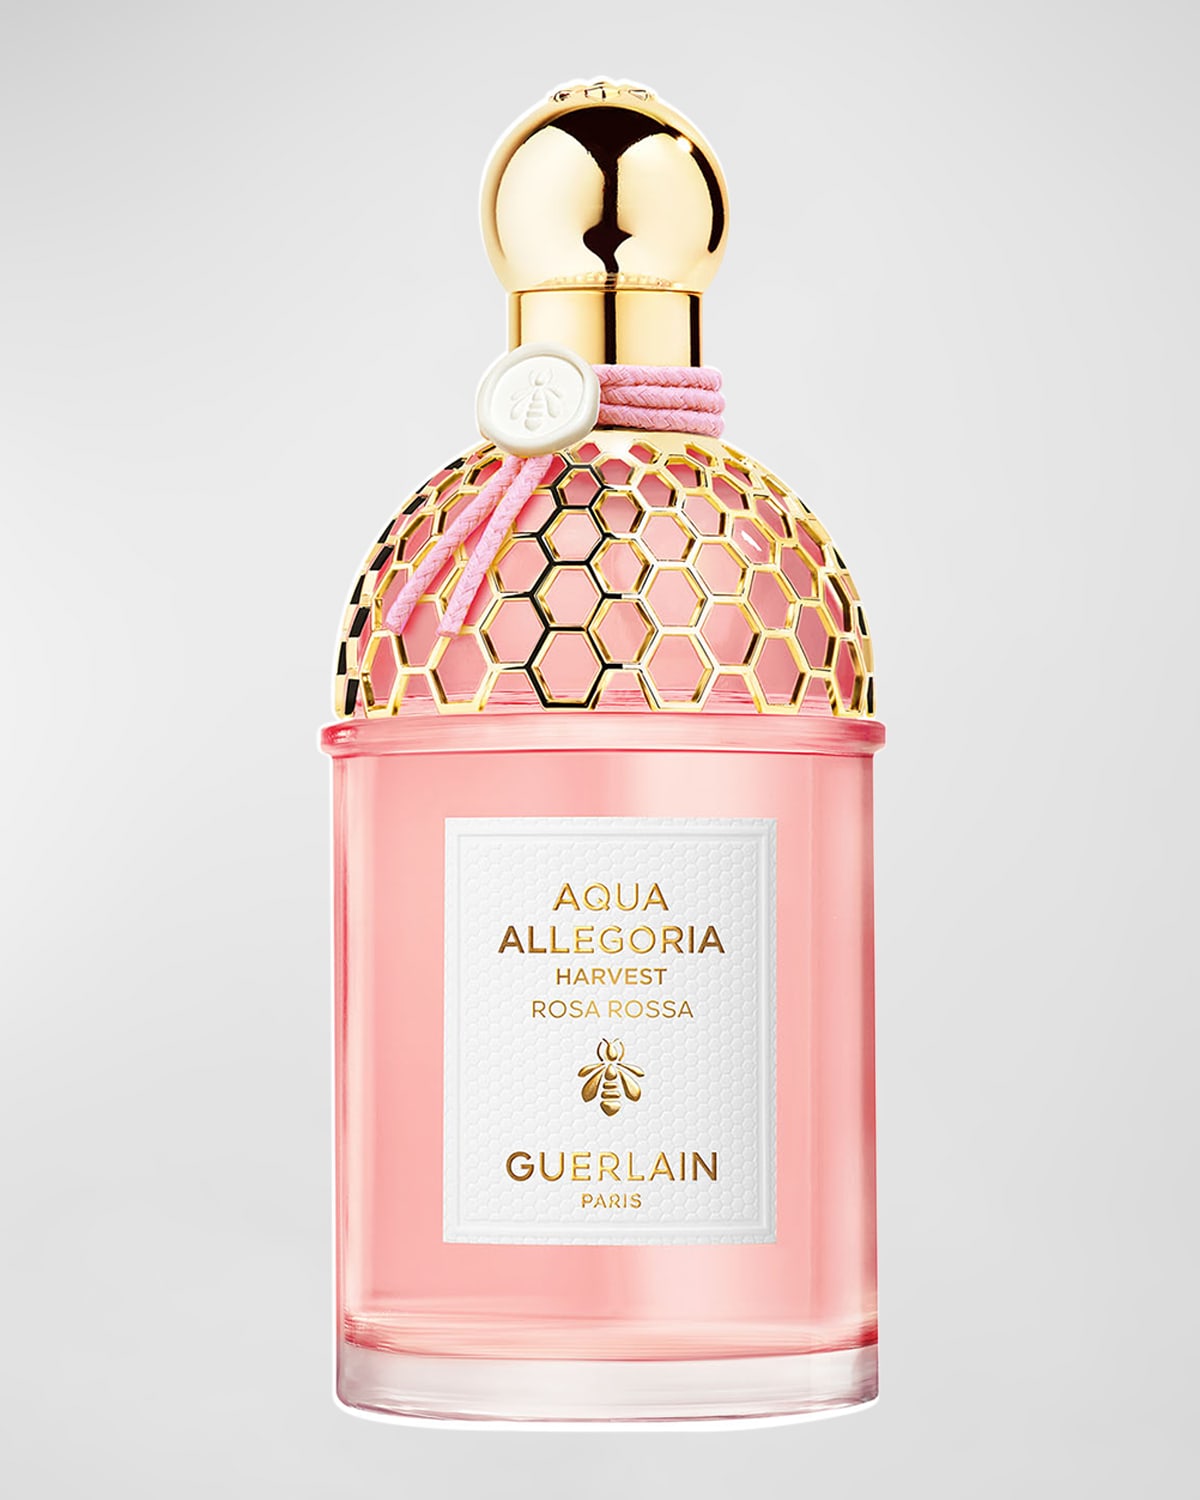 Guerlain Aqua Allegoria Harvest Rosa Rossa Eau De Toilette, 4.2 Oz. - Limited Edition In Pink